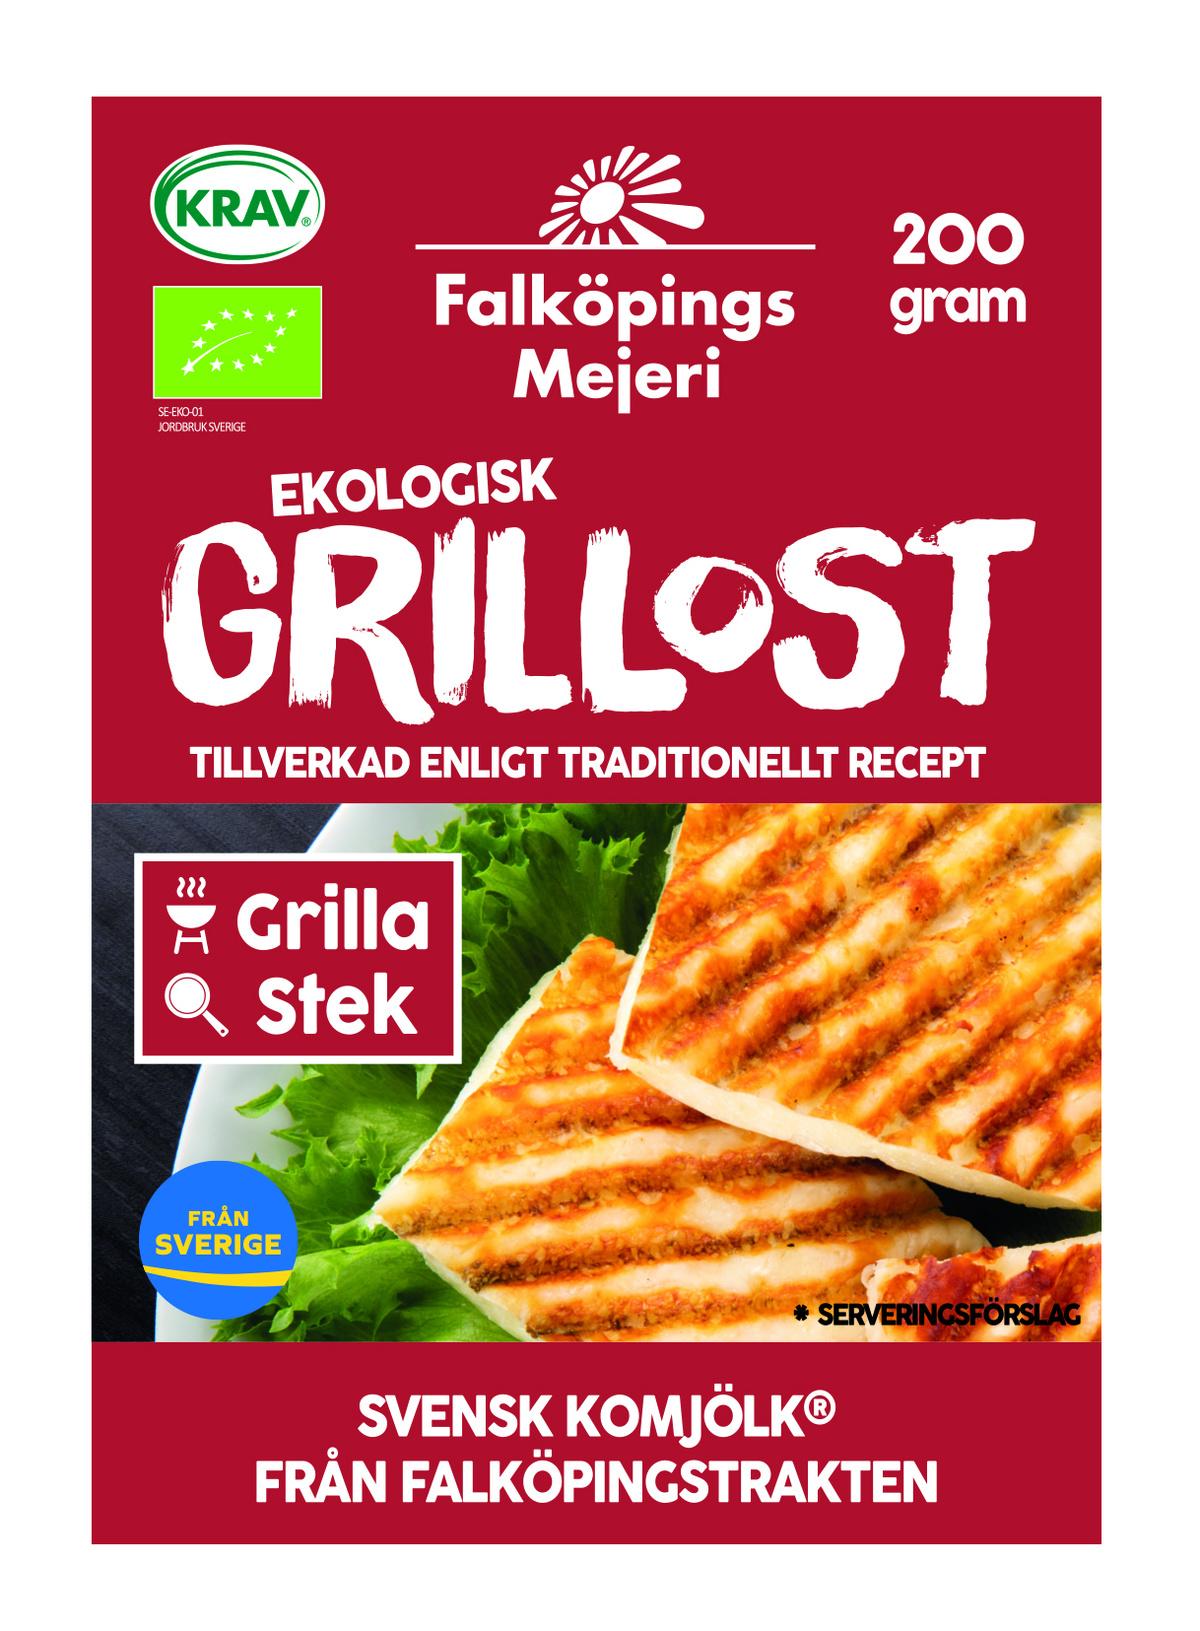 Falköpings Mejeri's Grillost'